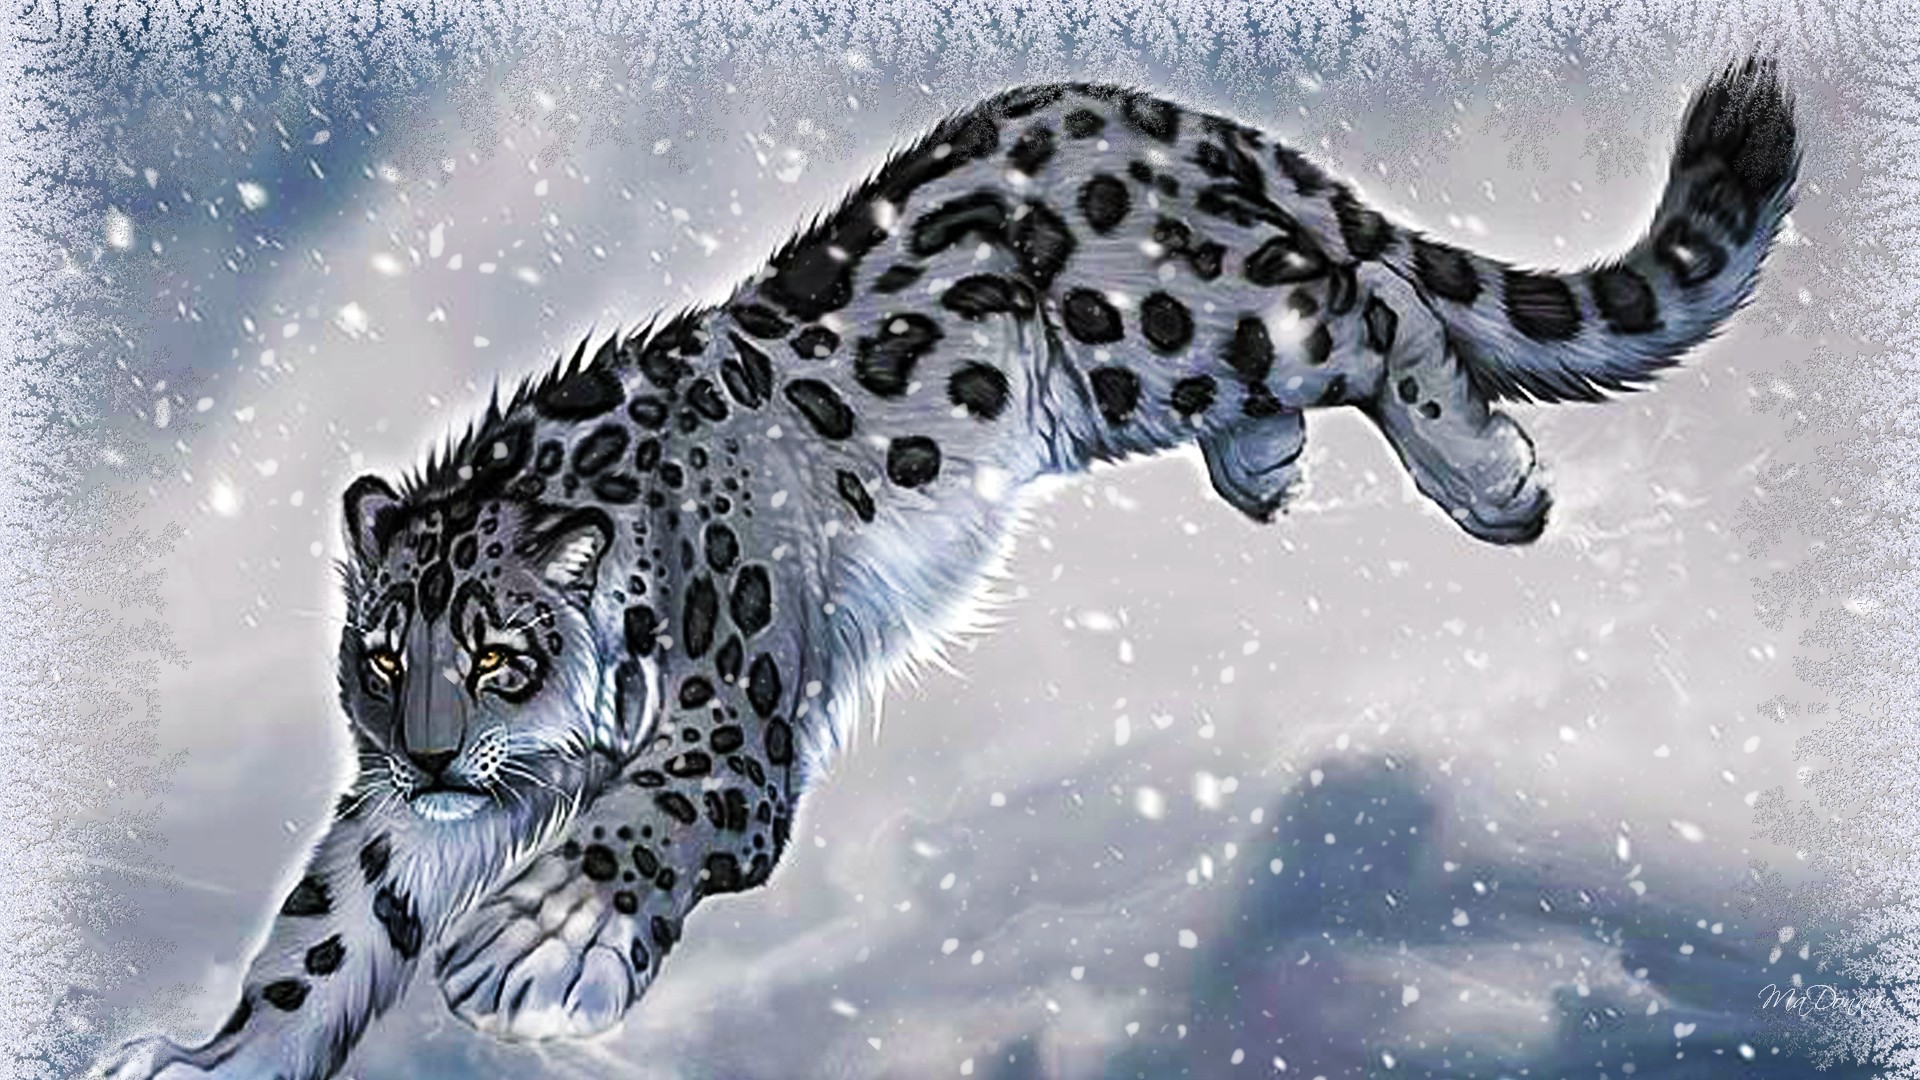 1920x1080 Image - Amazing-animal-snow-leopard-high-resolution-wallpaper-for-desktop- background-download-snow-leopard-images-free.jpg | Animal Jam Clans Wiki |  FANDOM ...